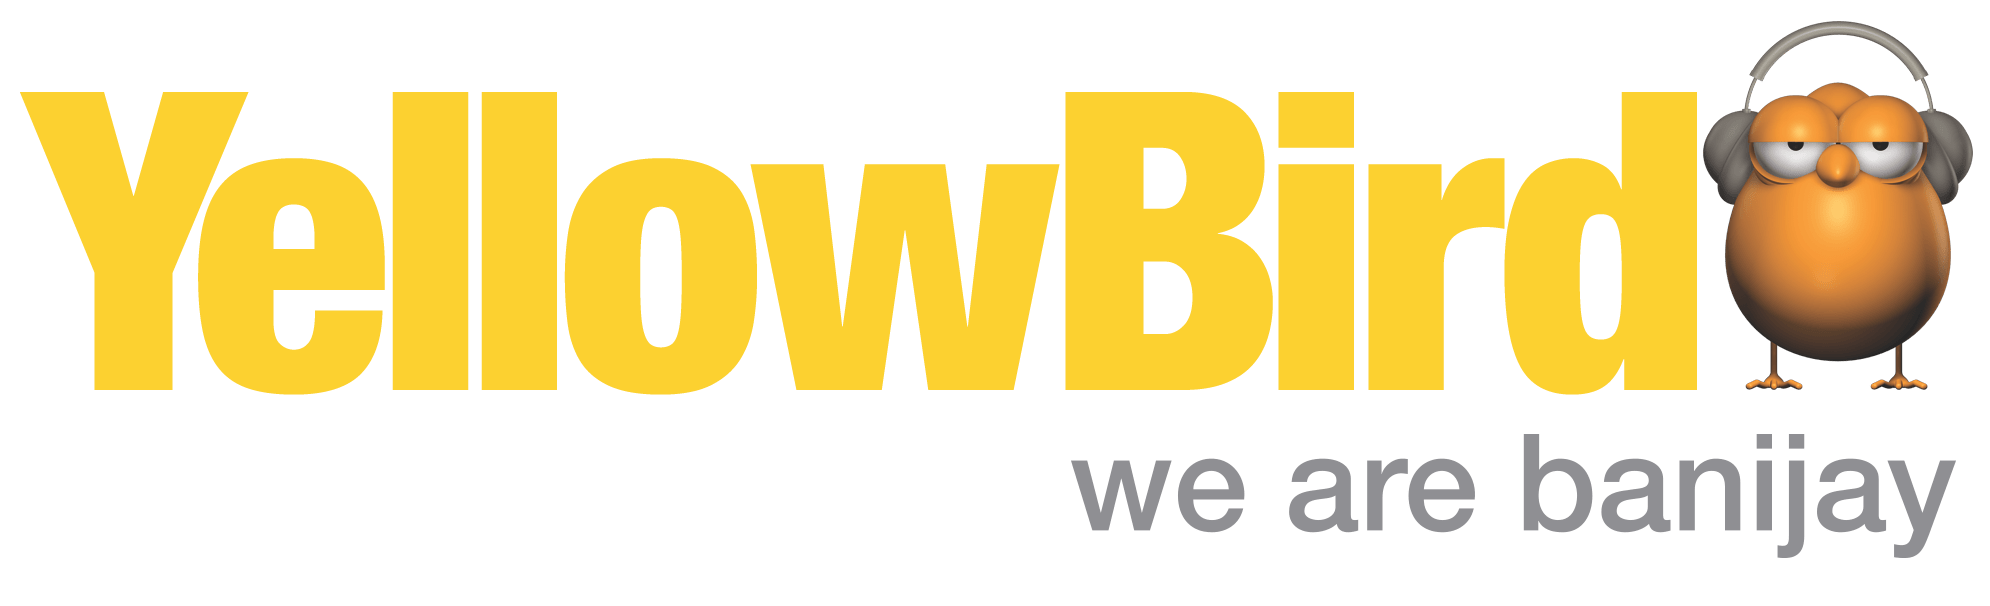 Yellow Bird Logo - Banijay's Yellow Bird lands in UK - Banijay Group